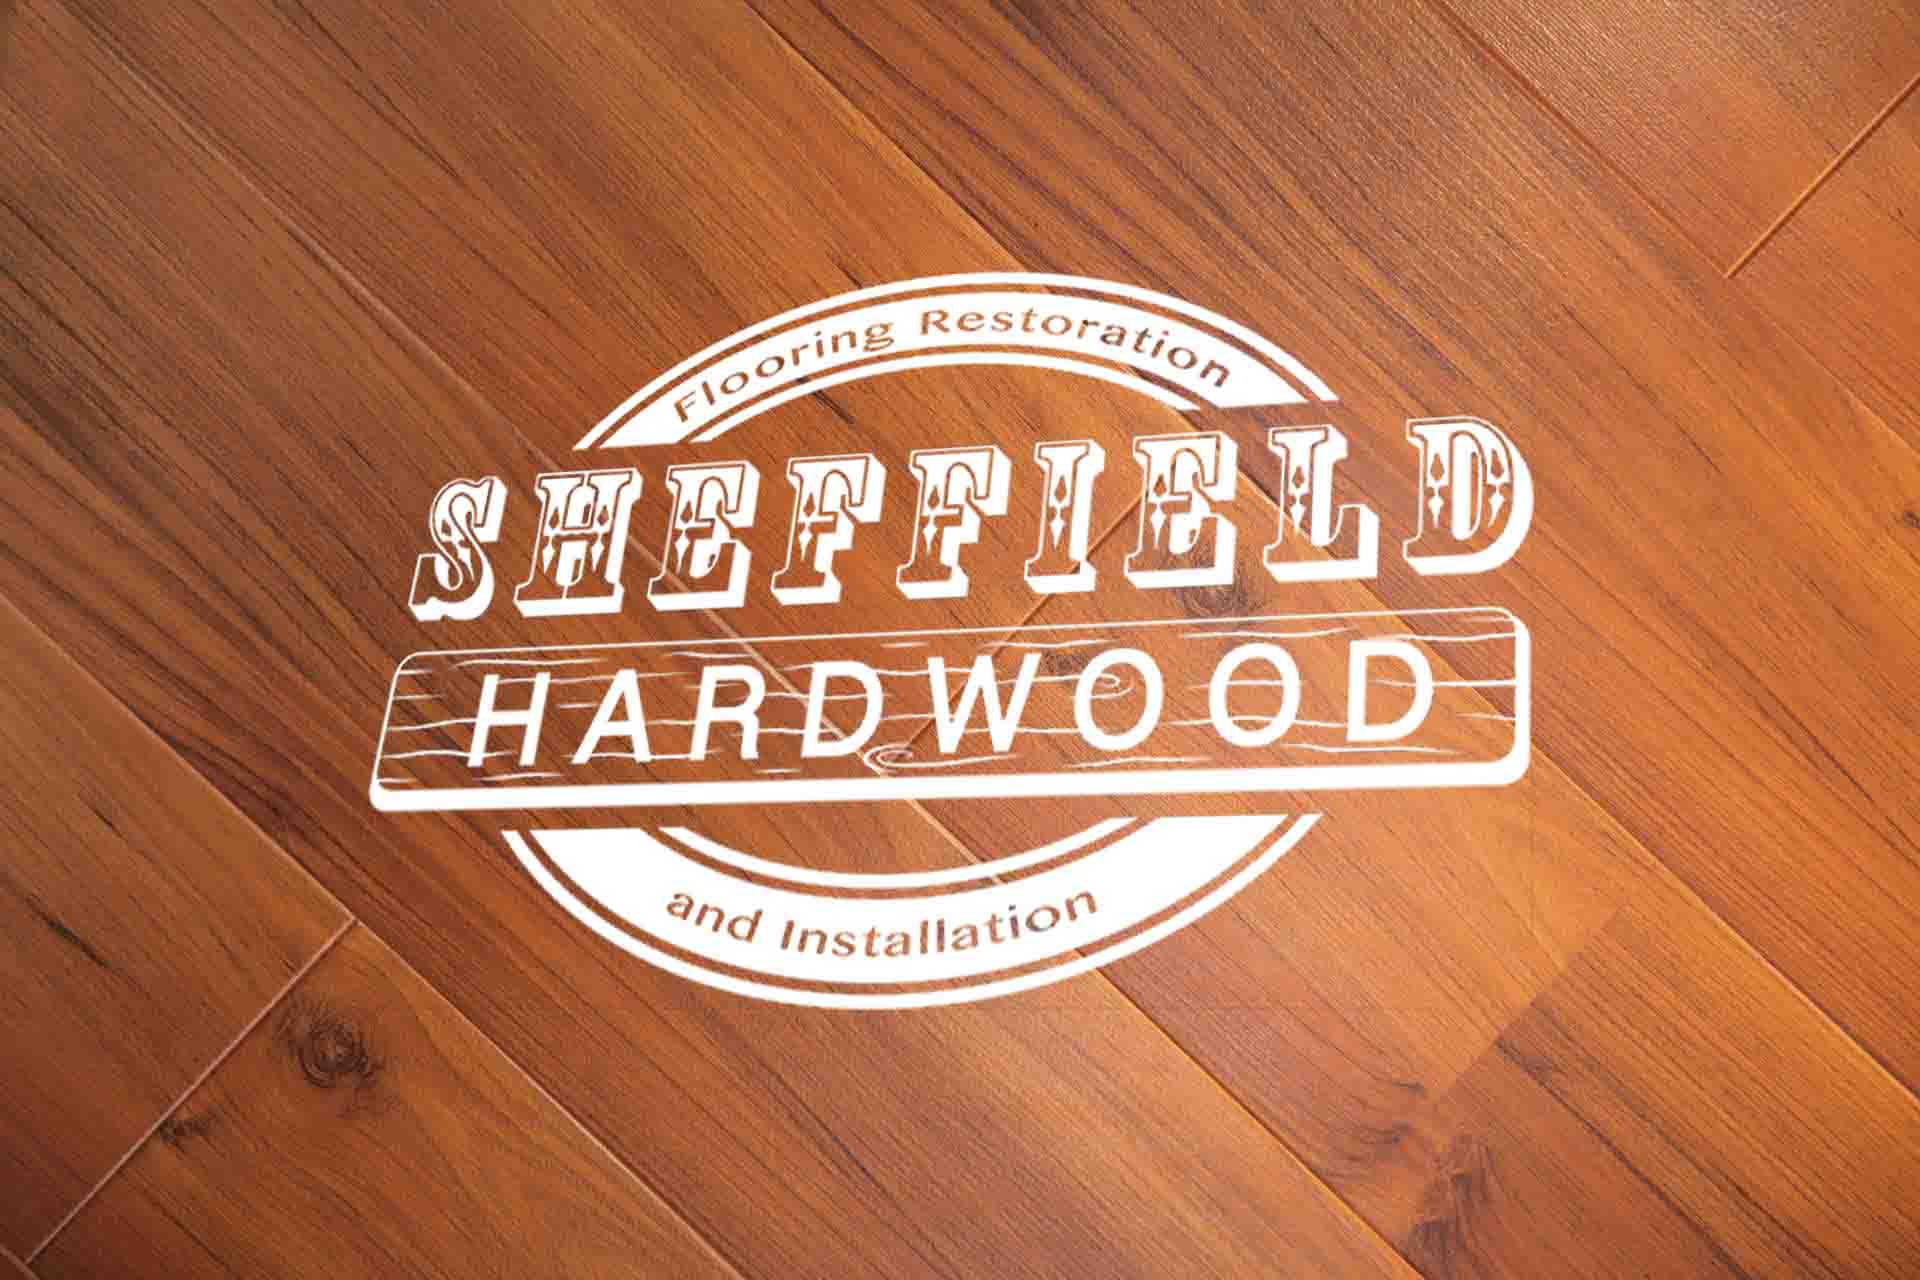 About Sheffield Hardwood